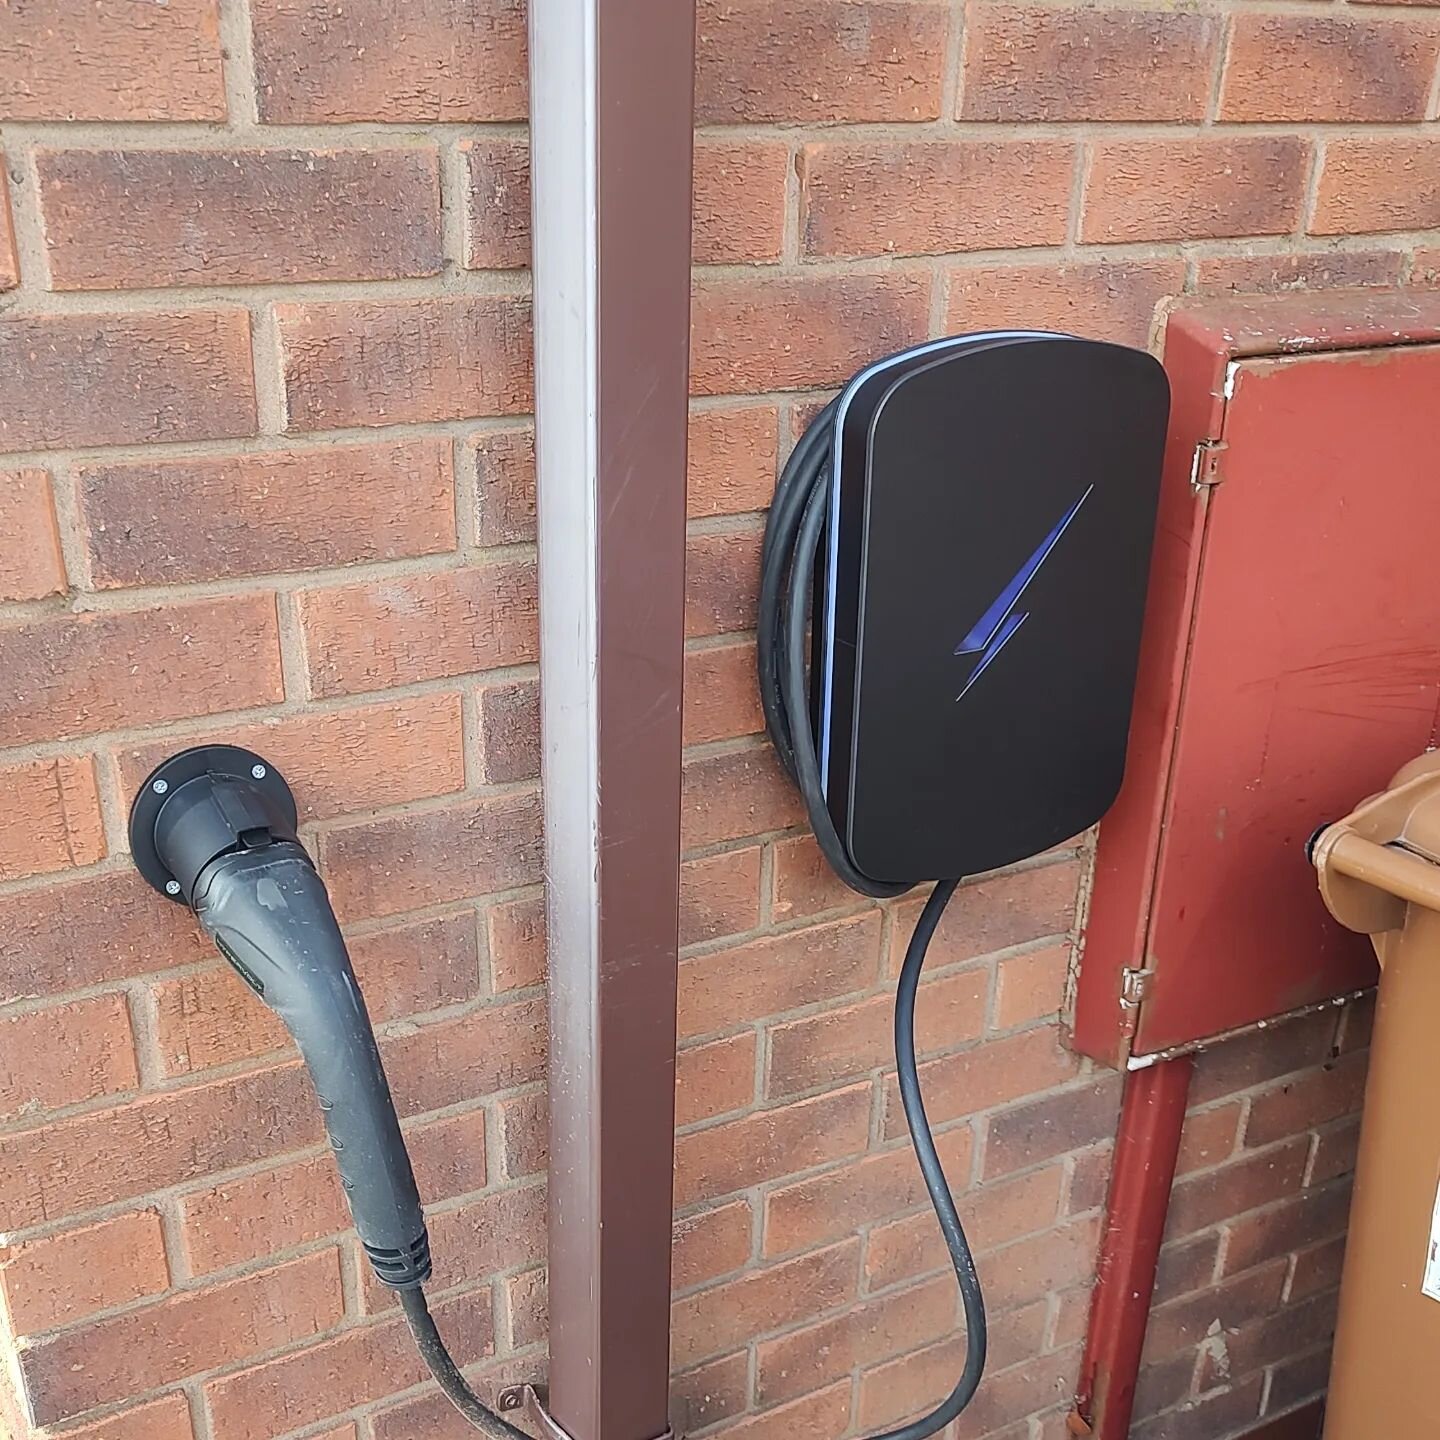 Another @hypervoltuk installed today for a customer in Northampton. #evcharger #hypervolt #electricvehiclenorthamptonshire  #electricvehicle #evchargermidlands #ev